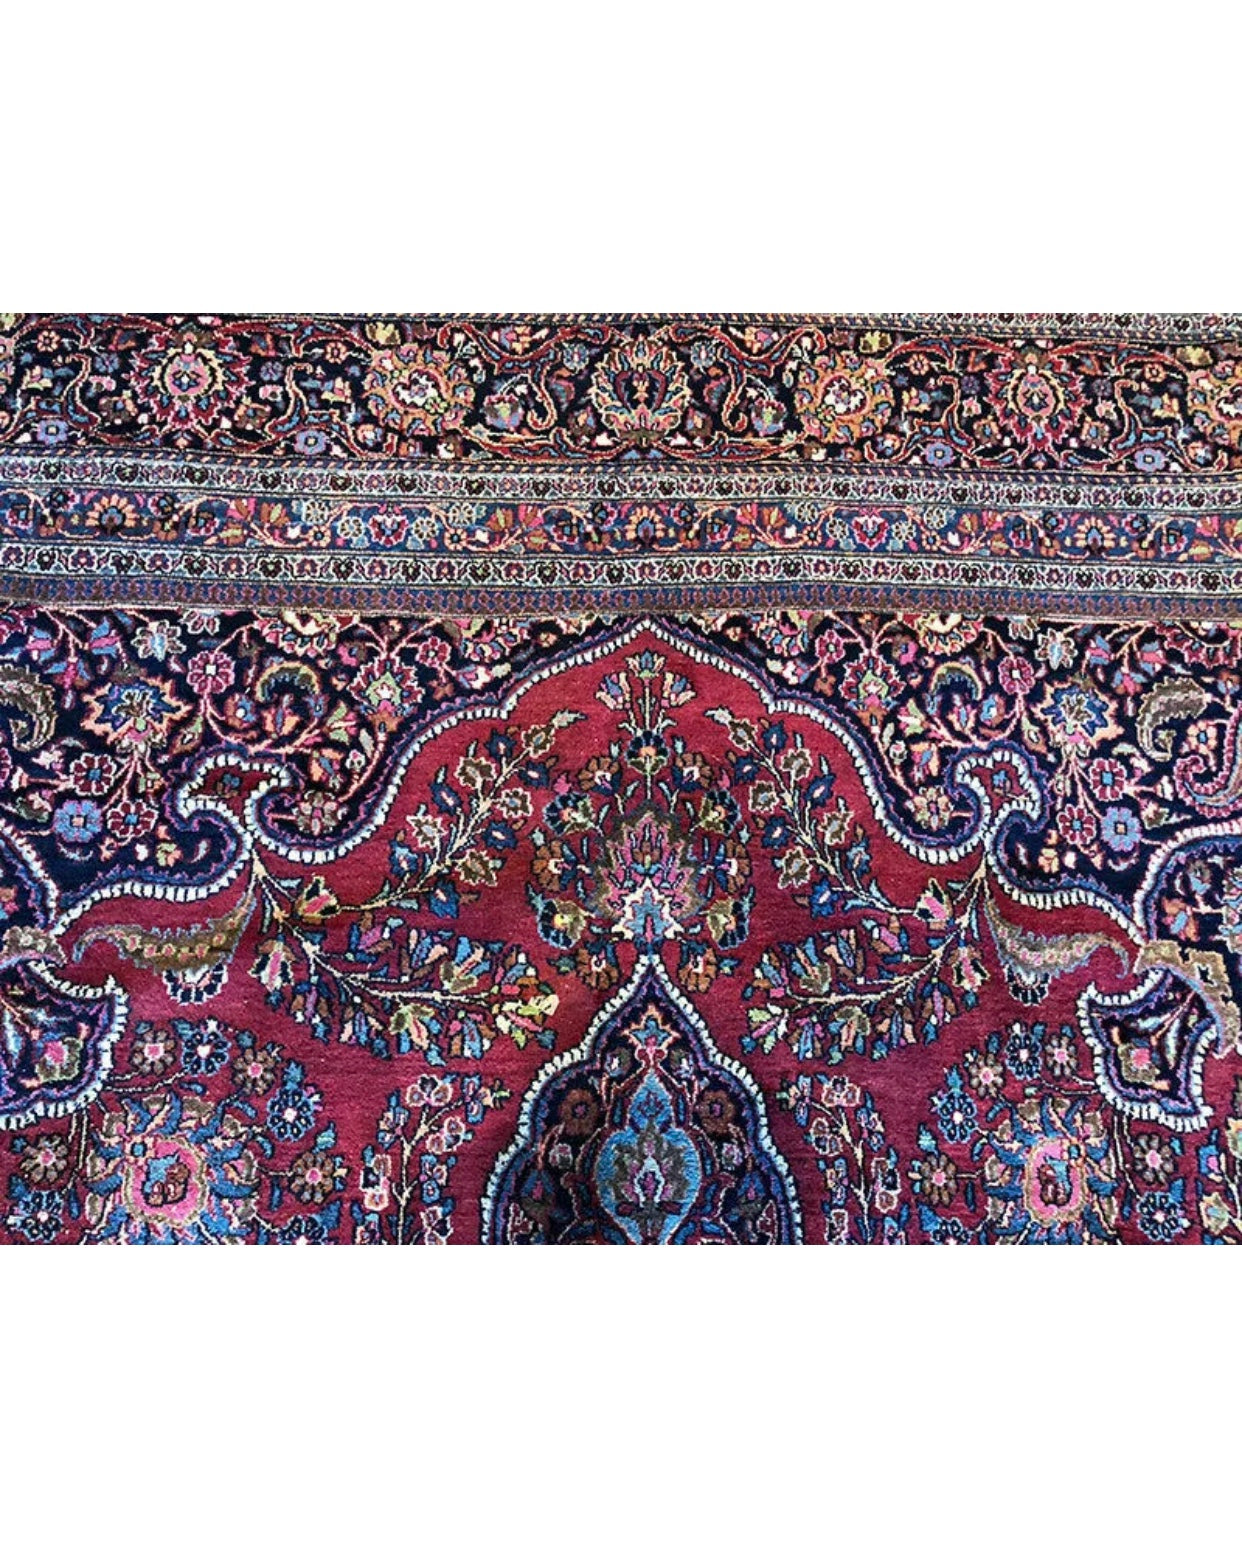 Antique Palace Size Drcorative Persian Khorasan / Mashad Rug